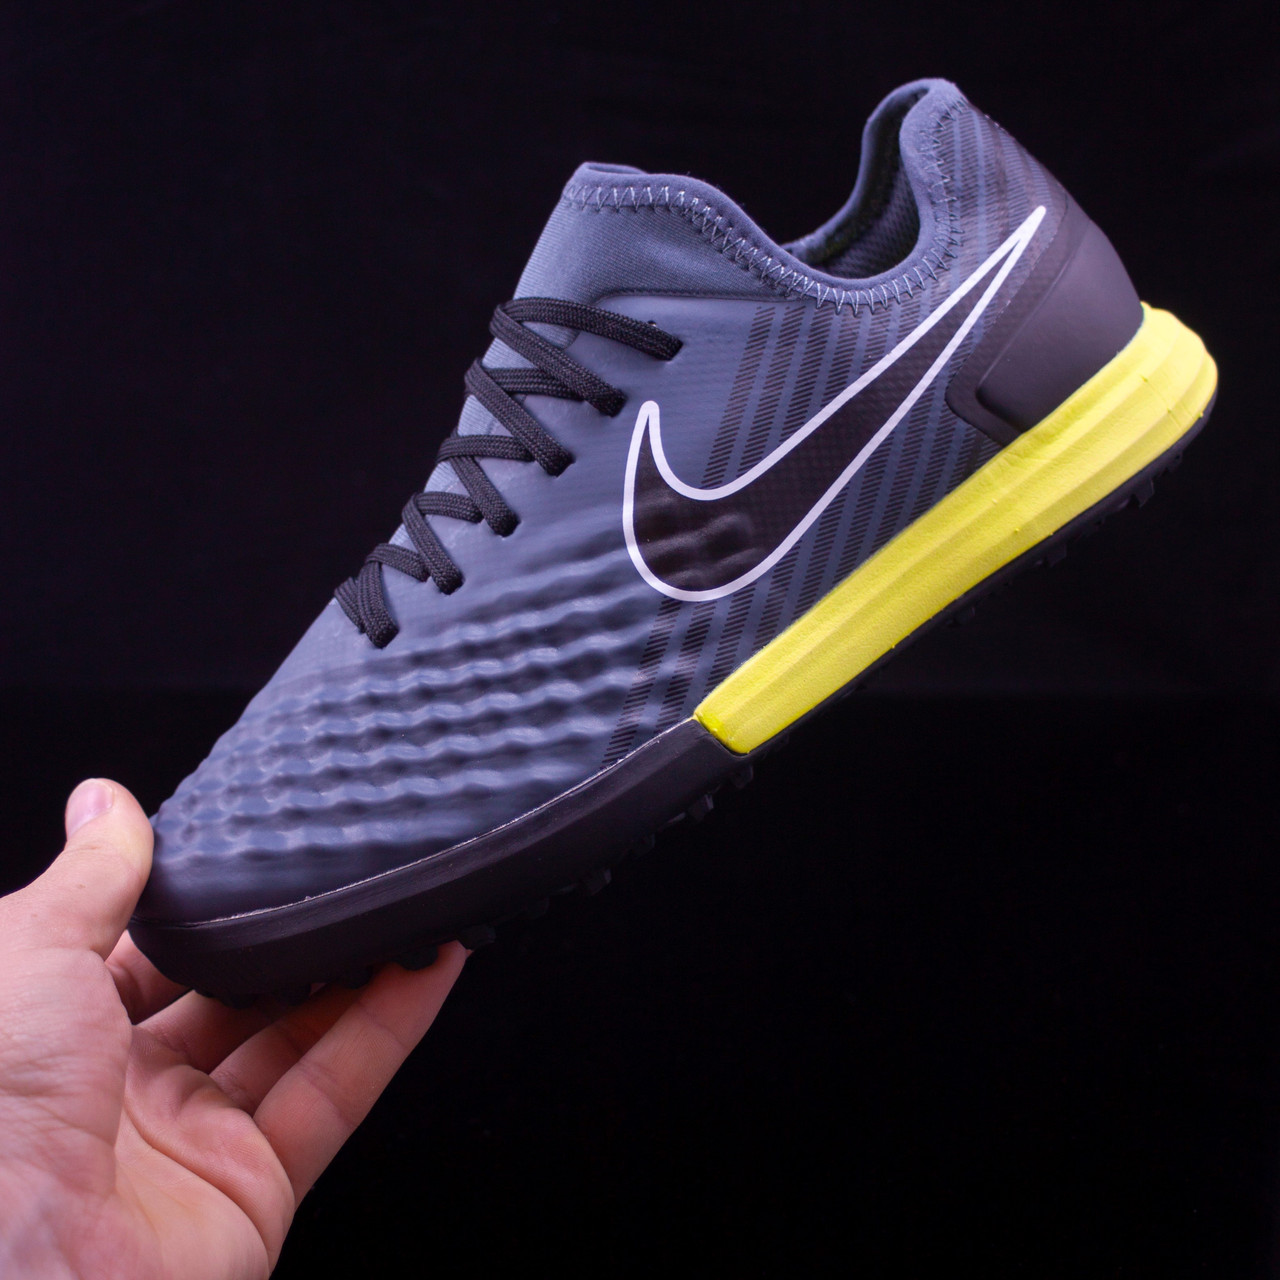 Сороконожки Nike Magista X Finale II TF (39-45), цена 1040 грн., купить в  Киеве — Prom.ua (ID#1320992698)